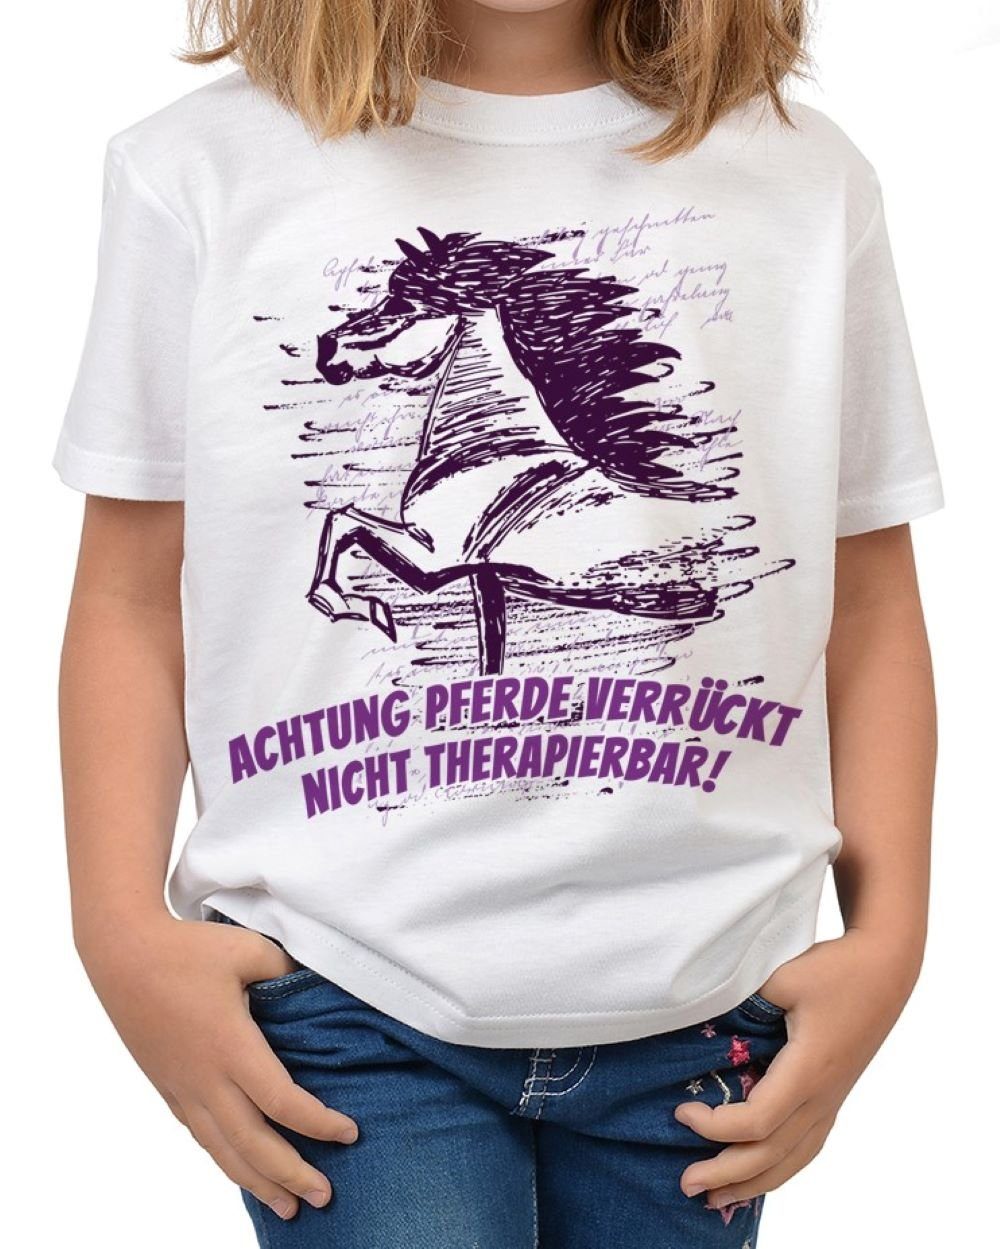 Tini - Shirts T-Shirt Mädchen Pferde Motiv Shirt Pferde Sprüche Kindershirt: Achtung Pferdeverrückt !!